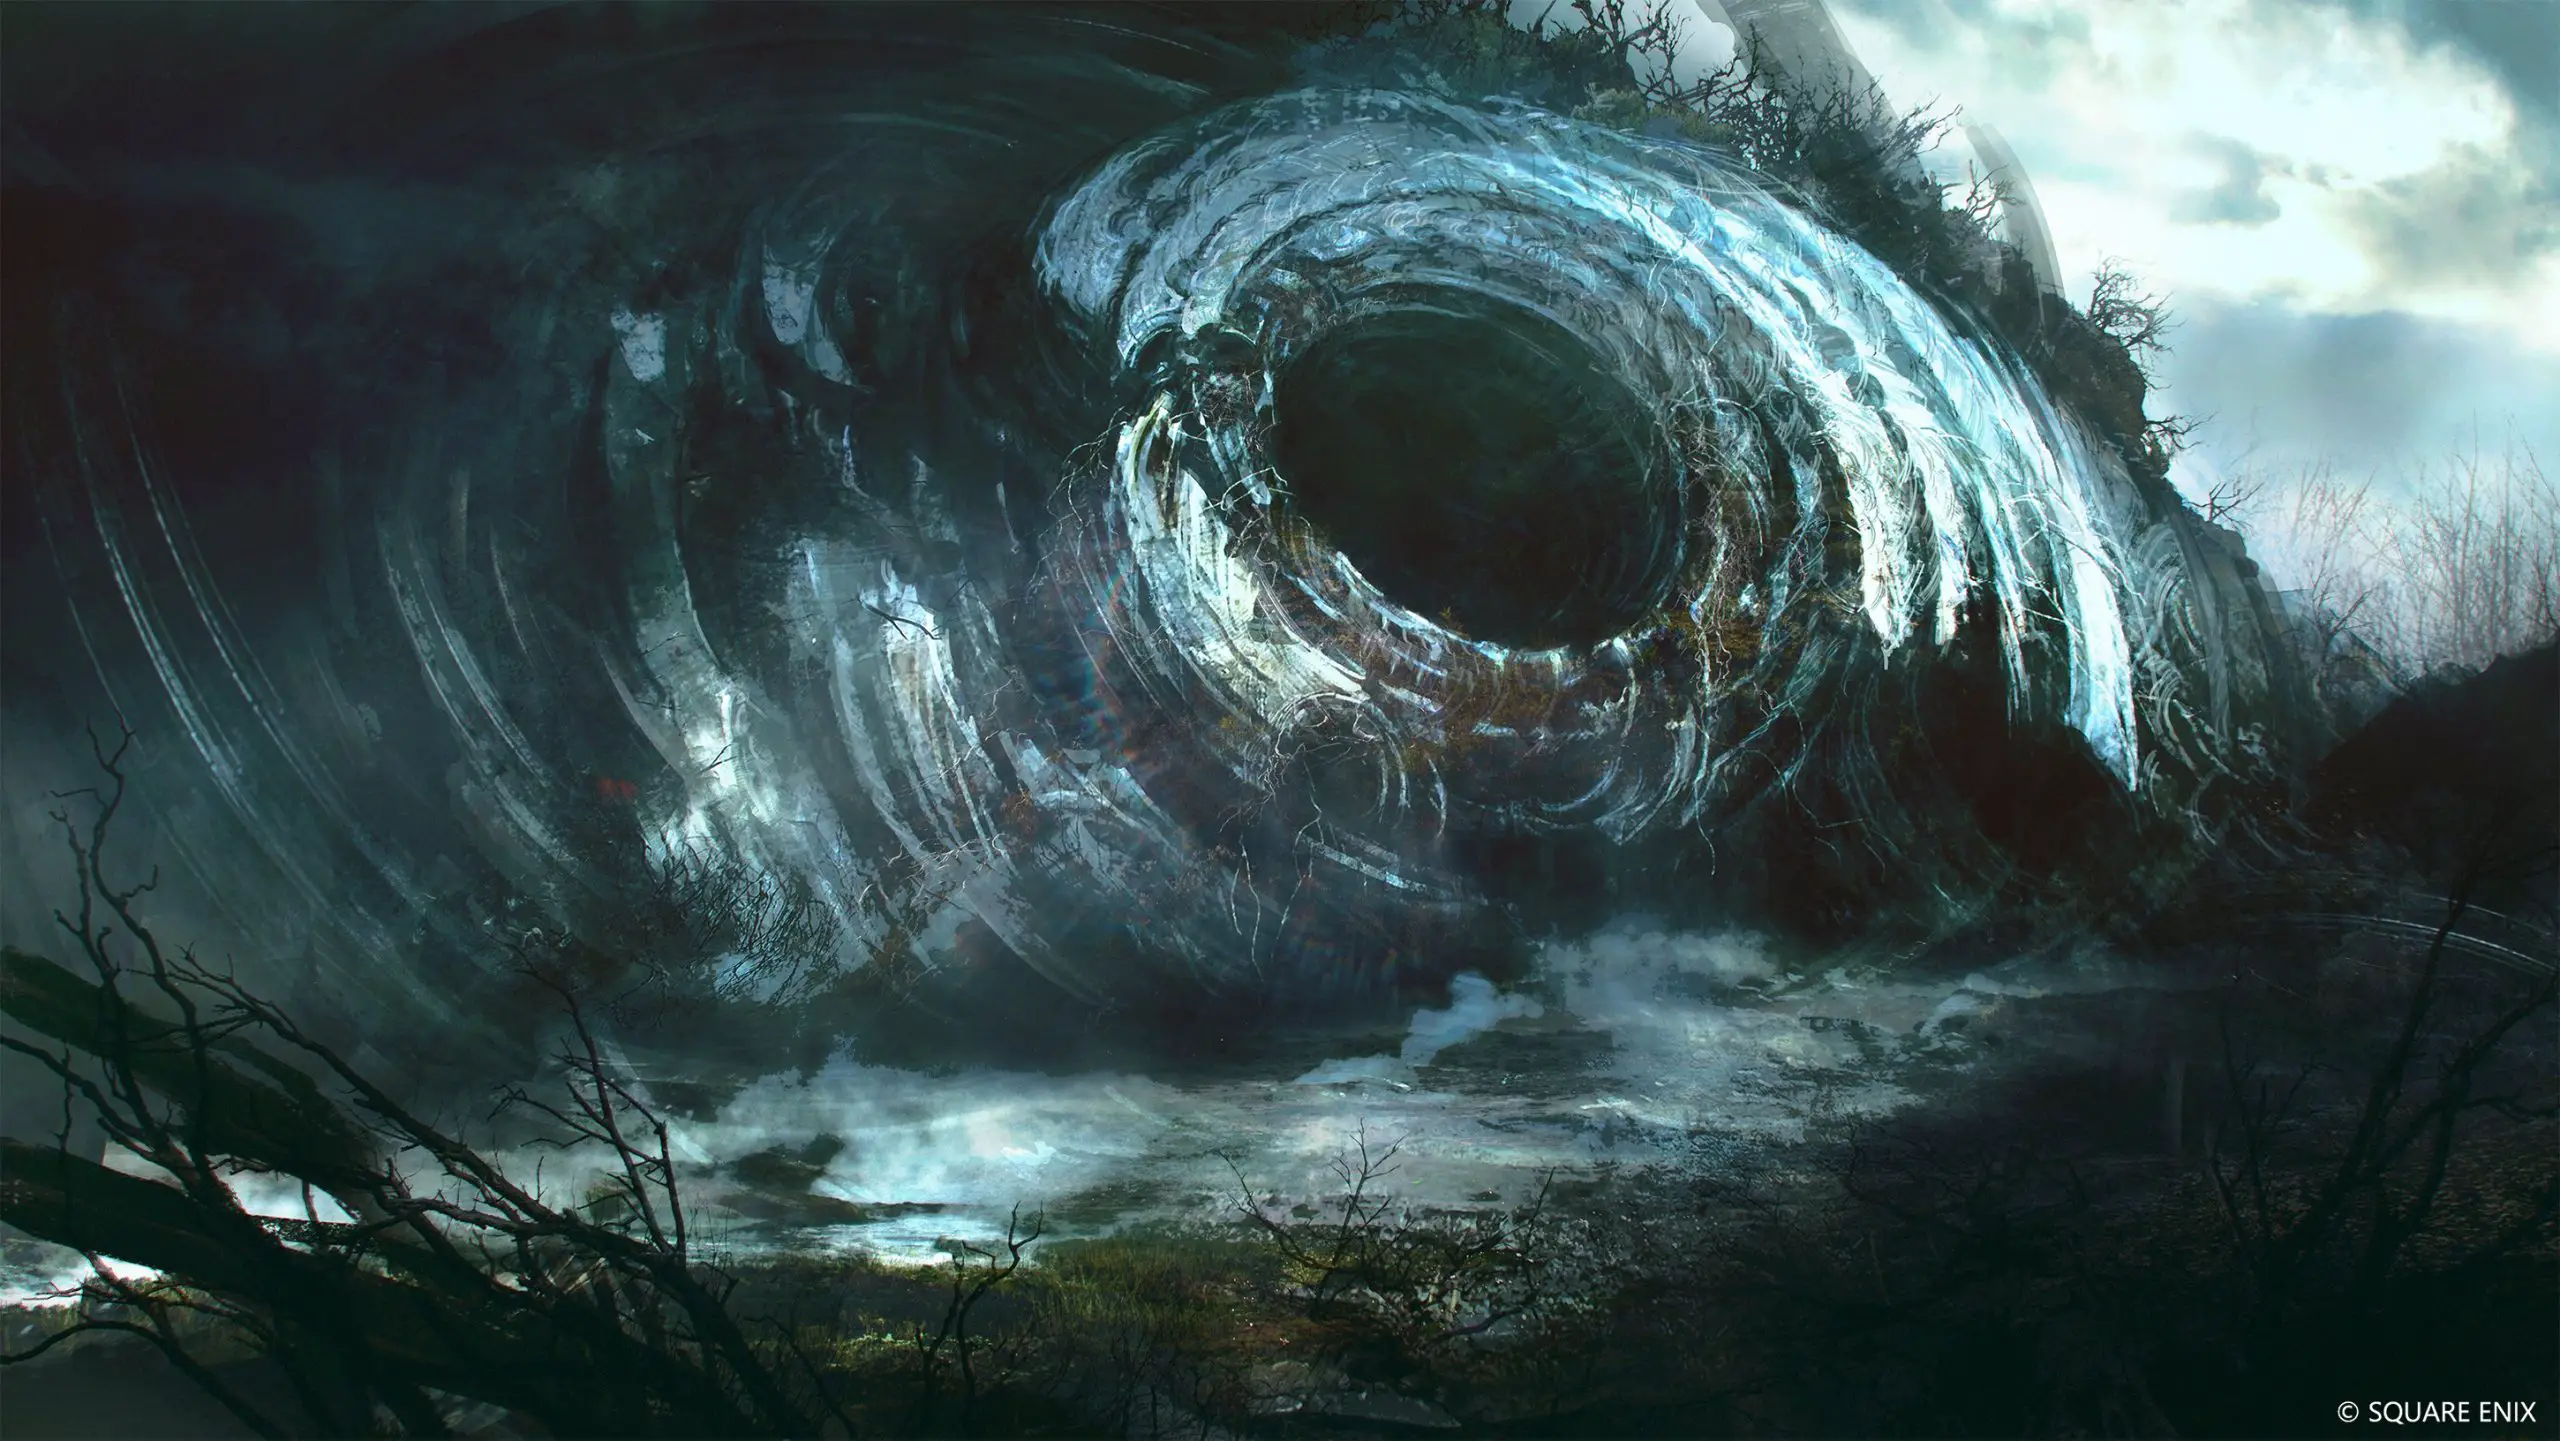 Final Fantasy XVI Shares Artwork Depicting the Kingdom of Waloed Canyon